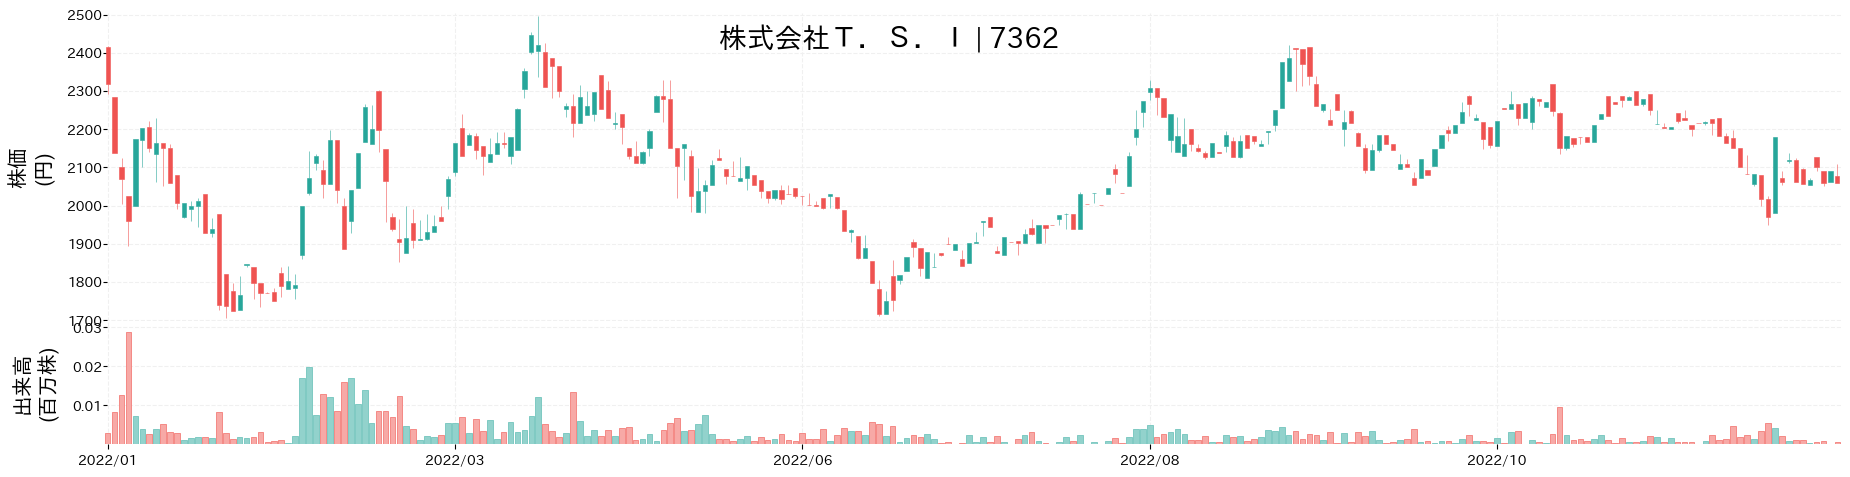 T.S.Iの株価推移(2022)